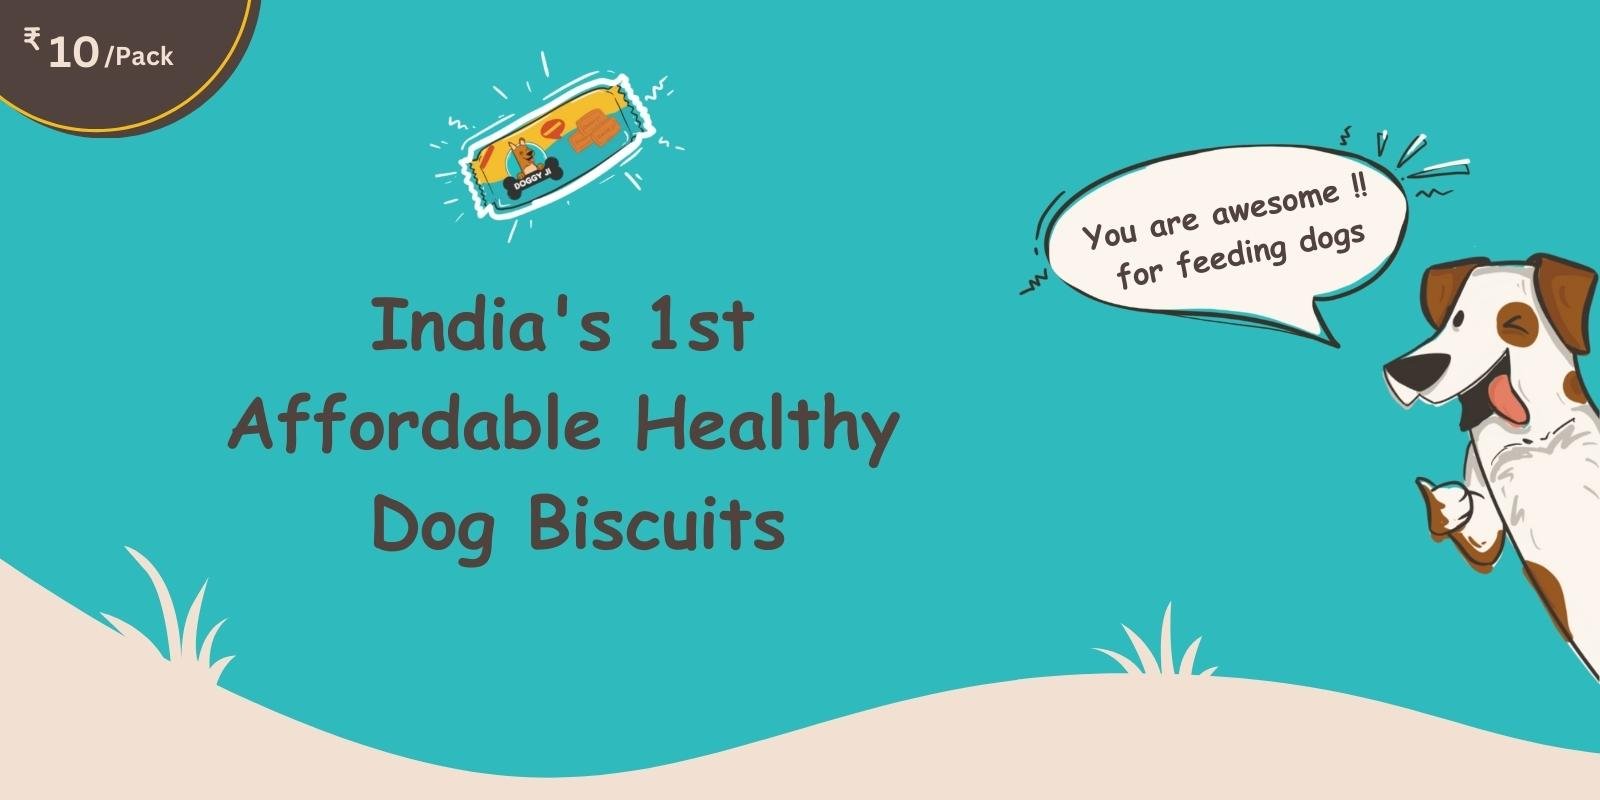 Affordable dog biscuits